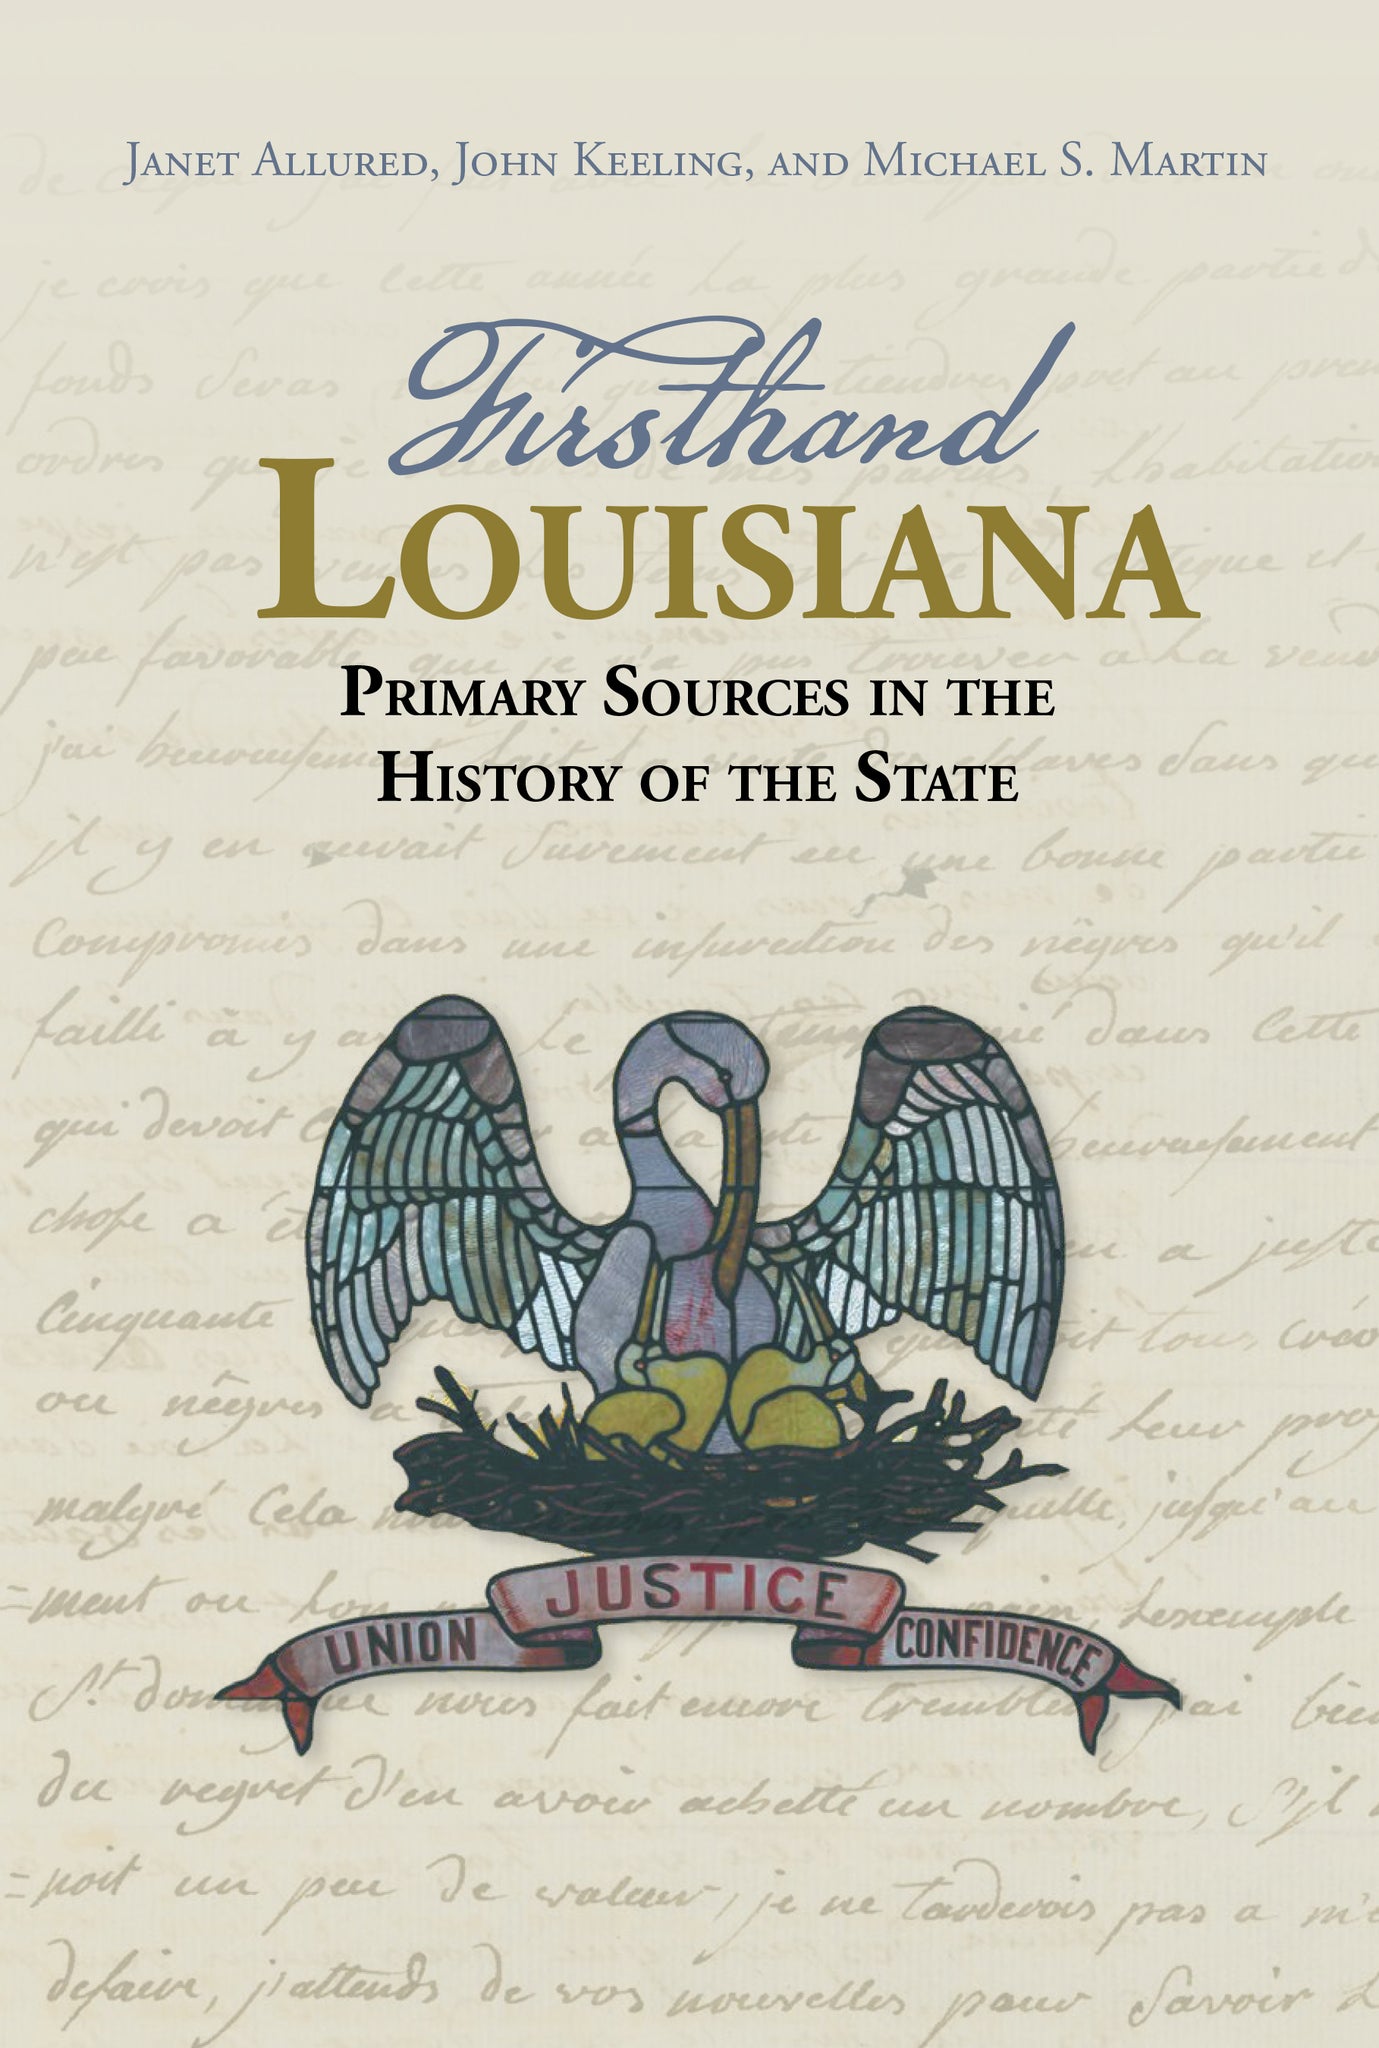 A Brief History of the Louisiana Flag